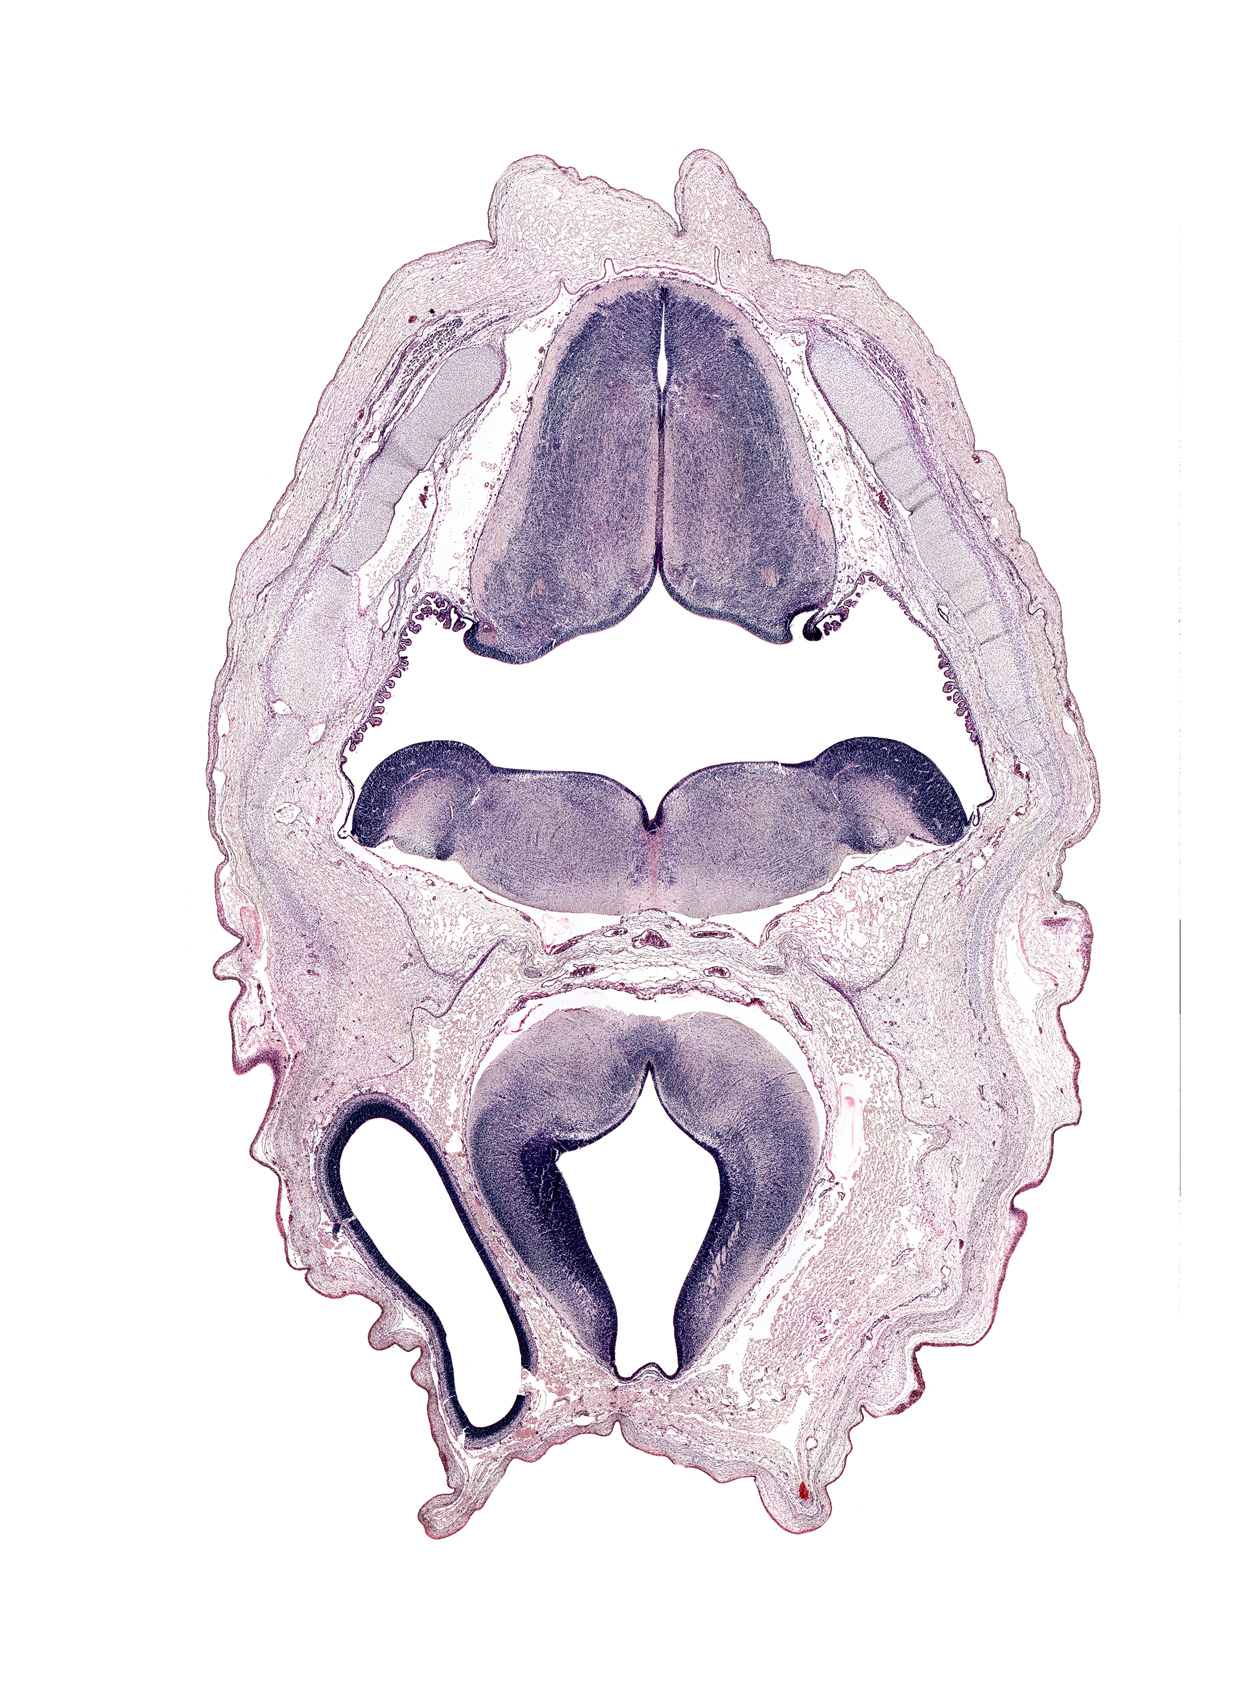 artifact space(s), basilar artery, cephalic edge of endolymphatic sac, cerebral vesicle (hemisphere), dural band for tentorium cerebelli, hypoglossal nucleus, intermediate zone, marginal zone, middle dural venous plexus, myelencephalon (medulla oblongata), osteogenic layer, rhombencoel (fourth ventricle), sulcus limitans, tegmentum of pons, tract of vestibulocochlear nerve (CN VIII), ventricular zone